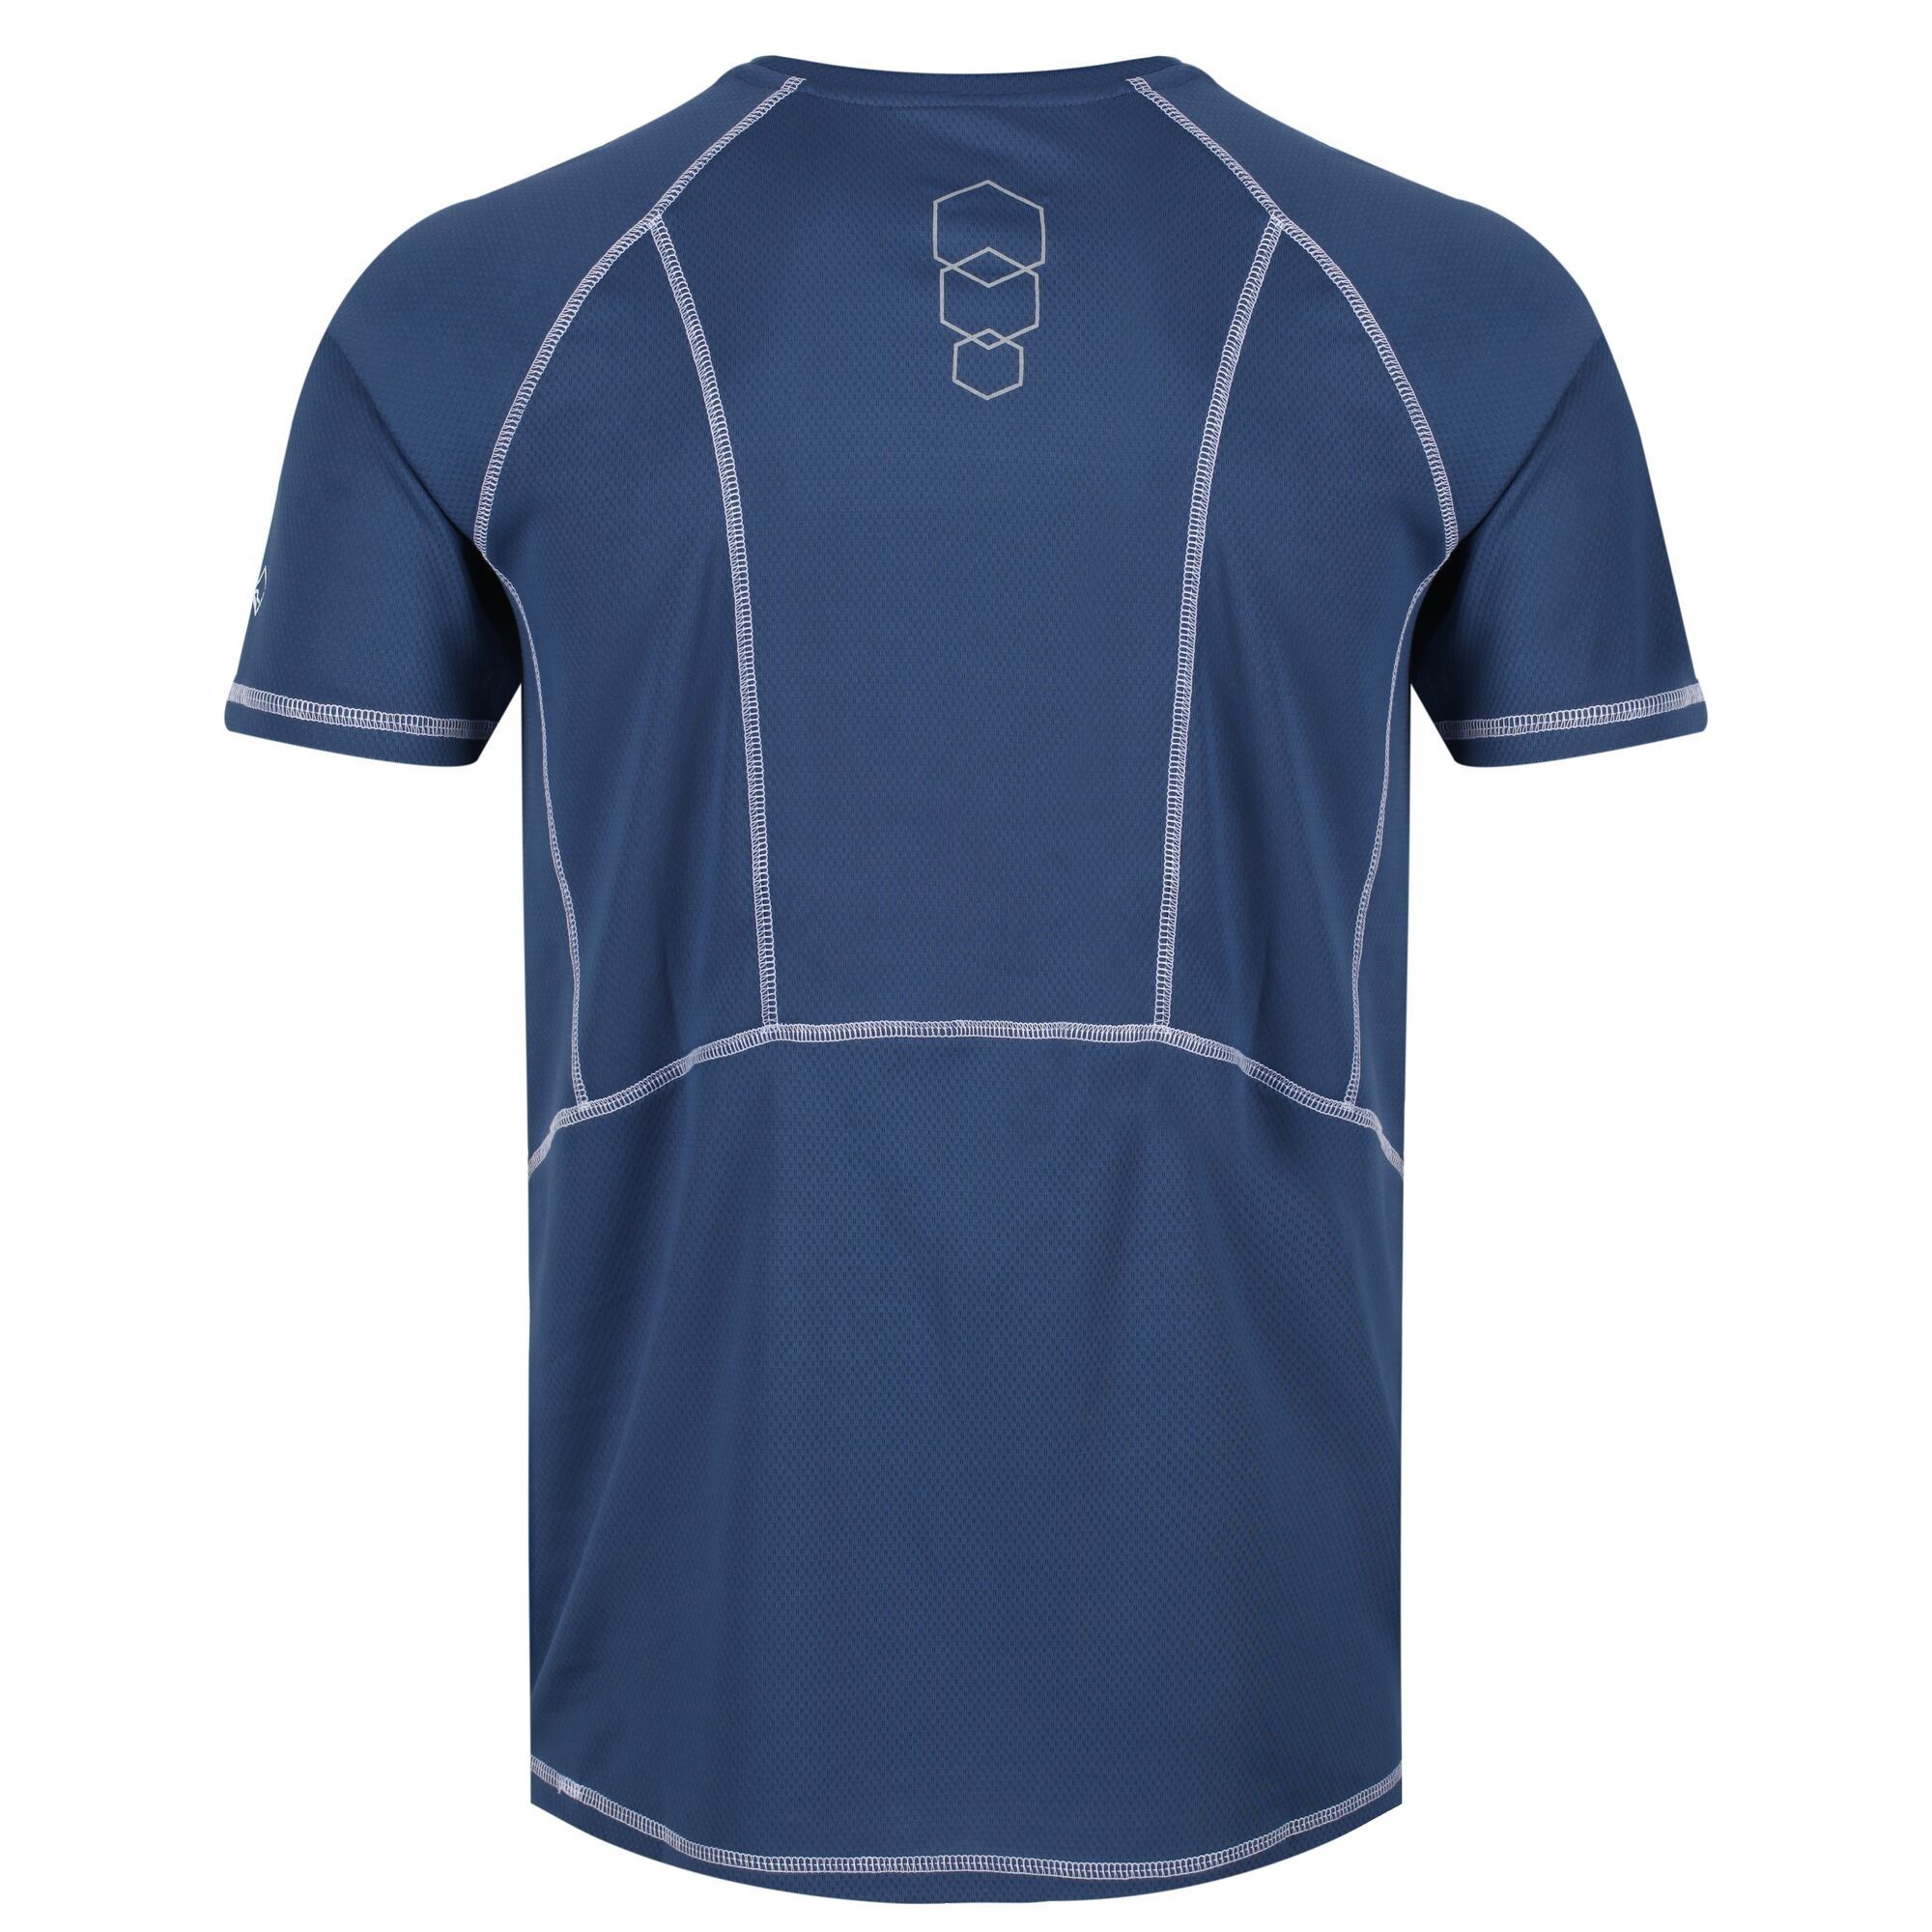 Vida II lightweight shirt. Quick drying wicking performance. Materials: 100% quick dry polyester mesh fabric.